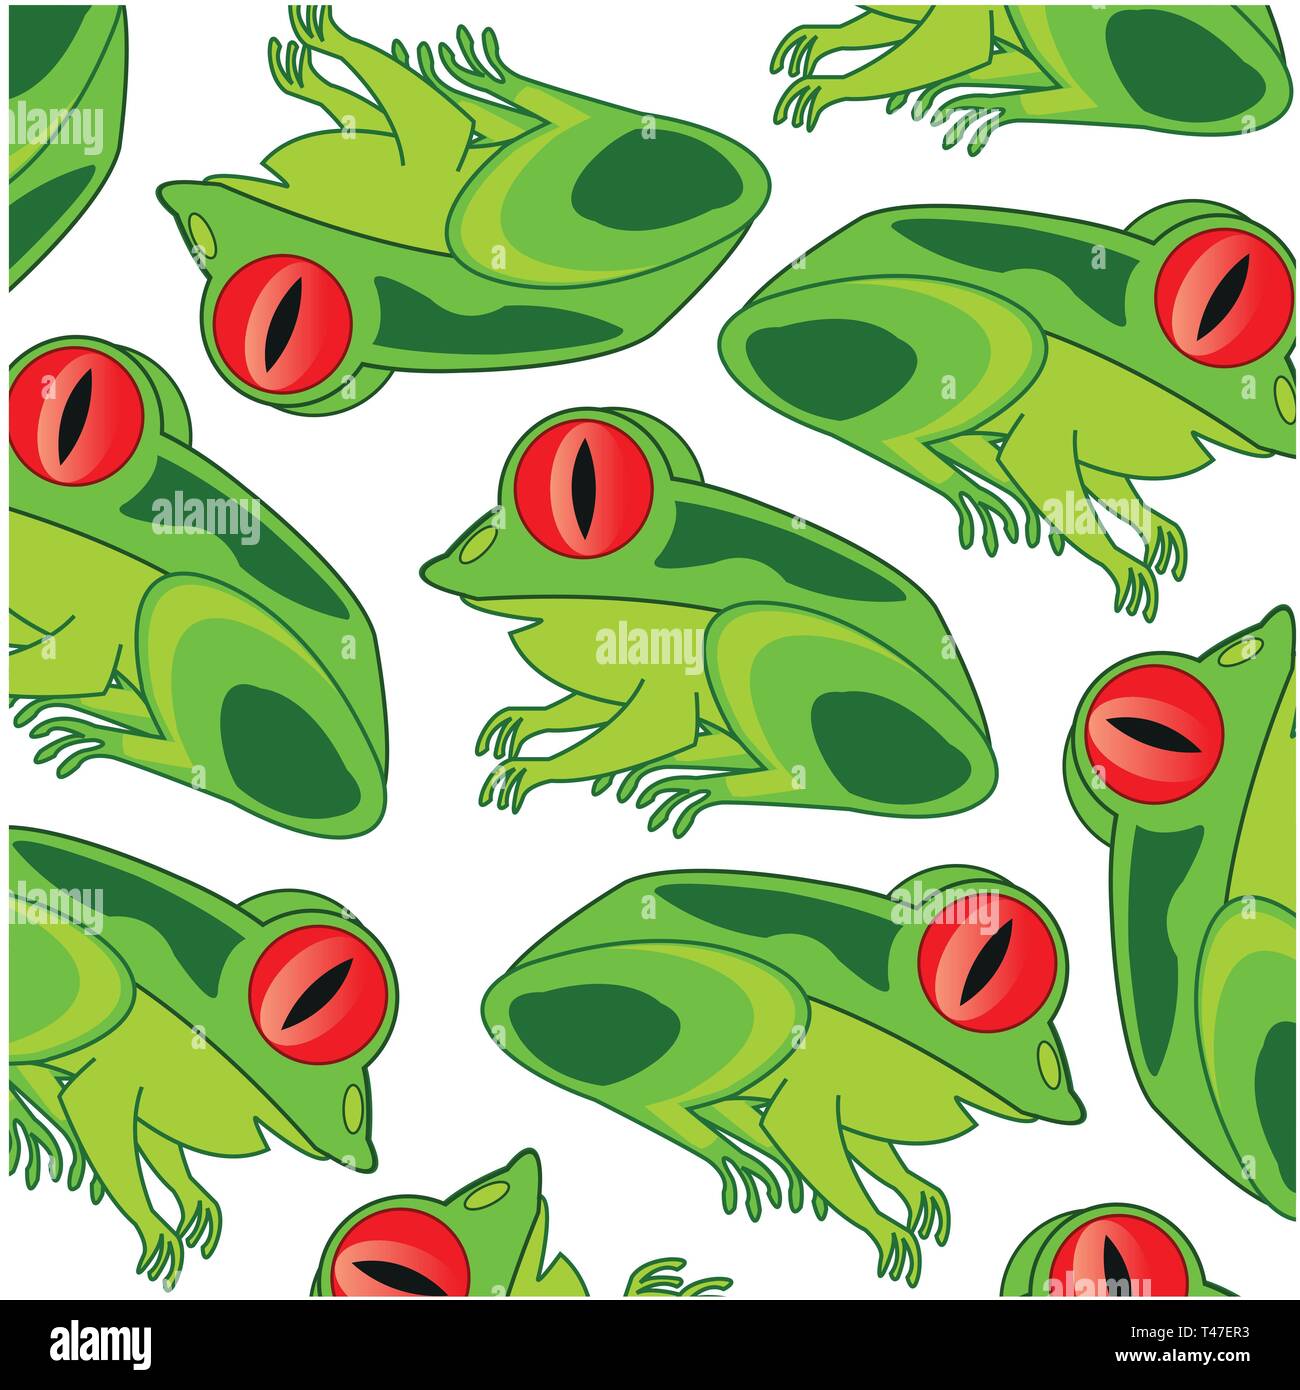 Vector Illustration der Karikatur des Frosch dekorative Muster  Stock-Vektorgrafik - Alamy